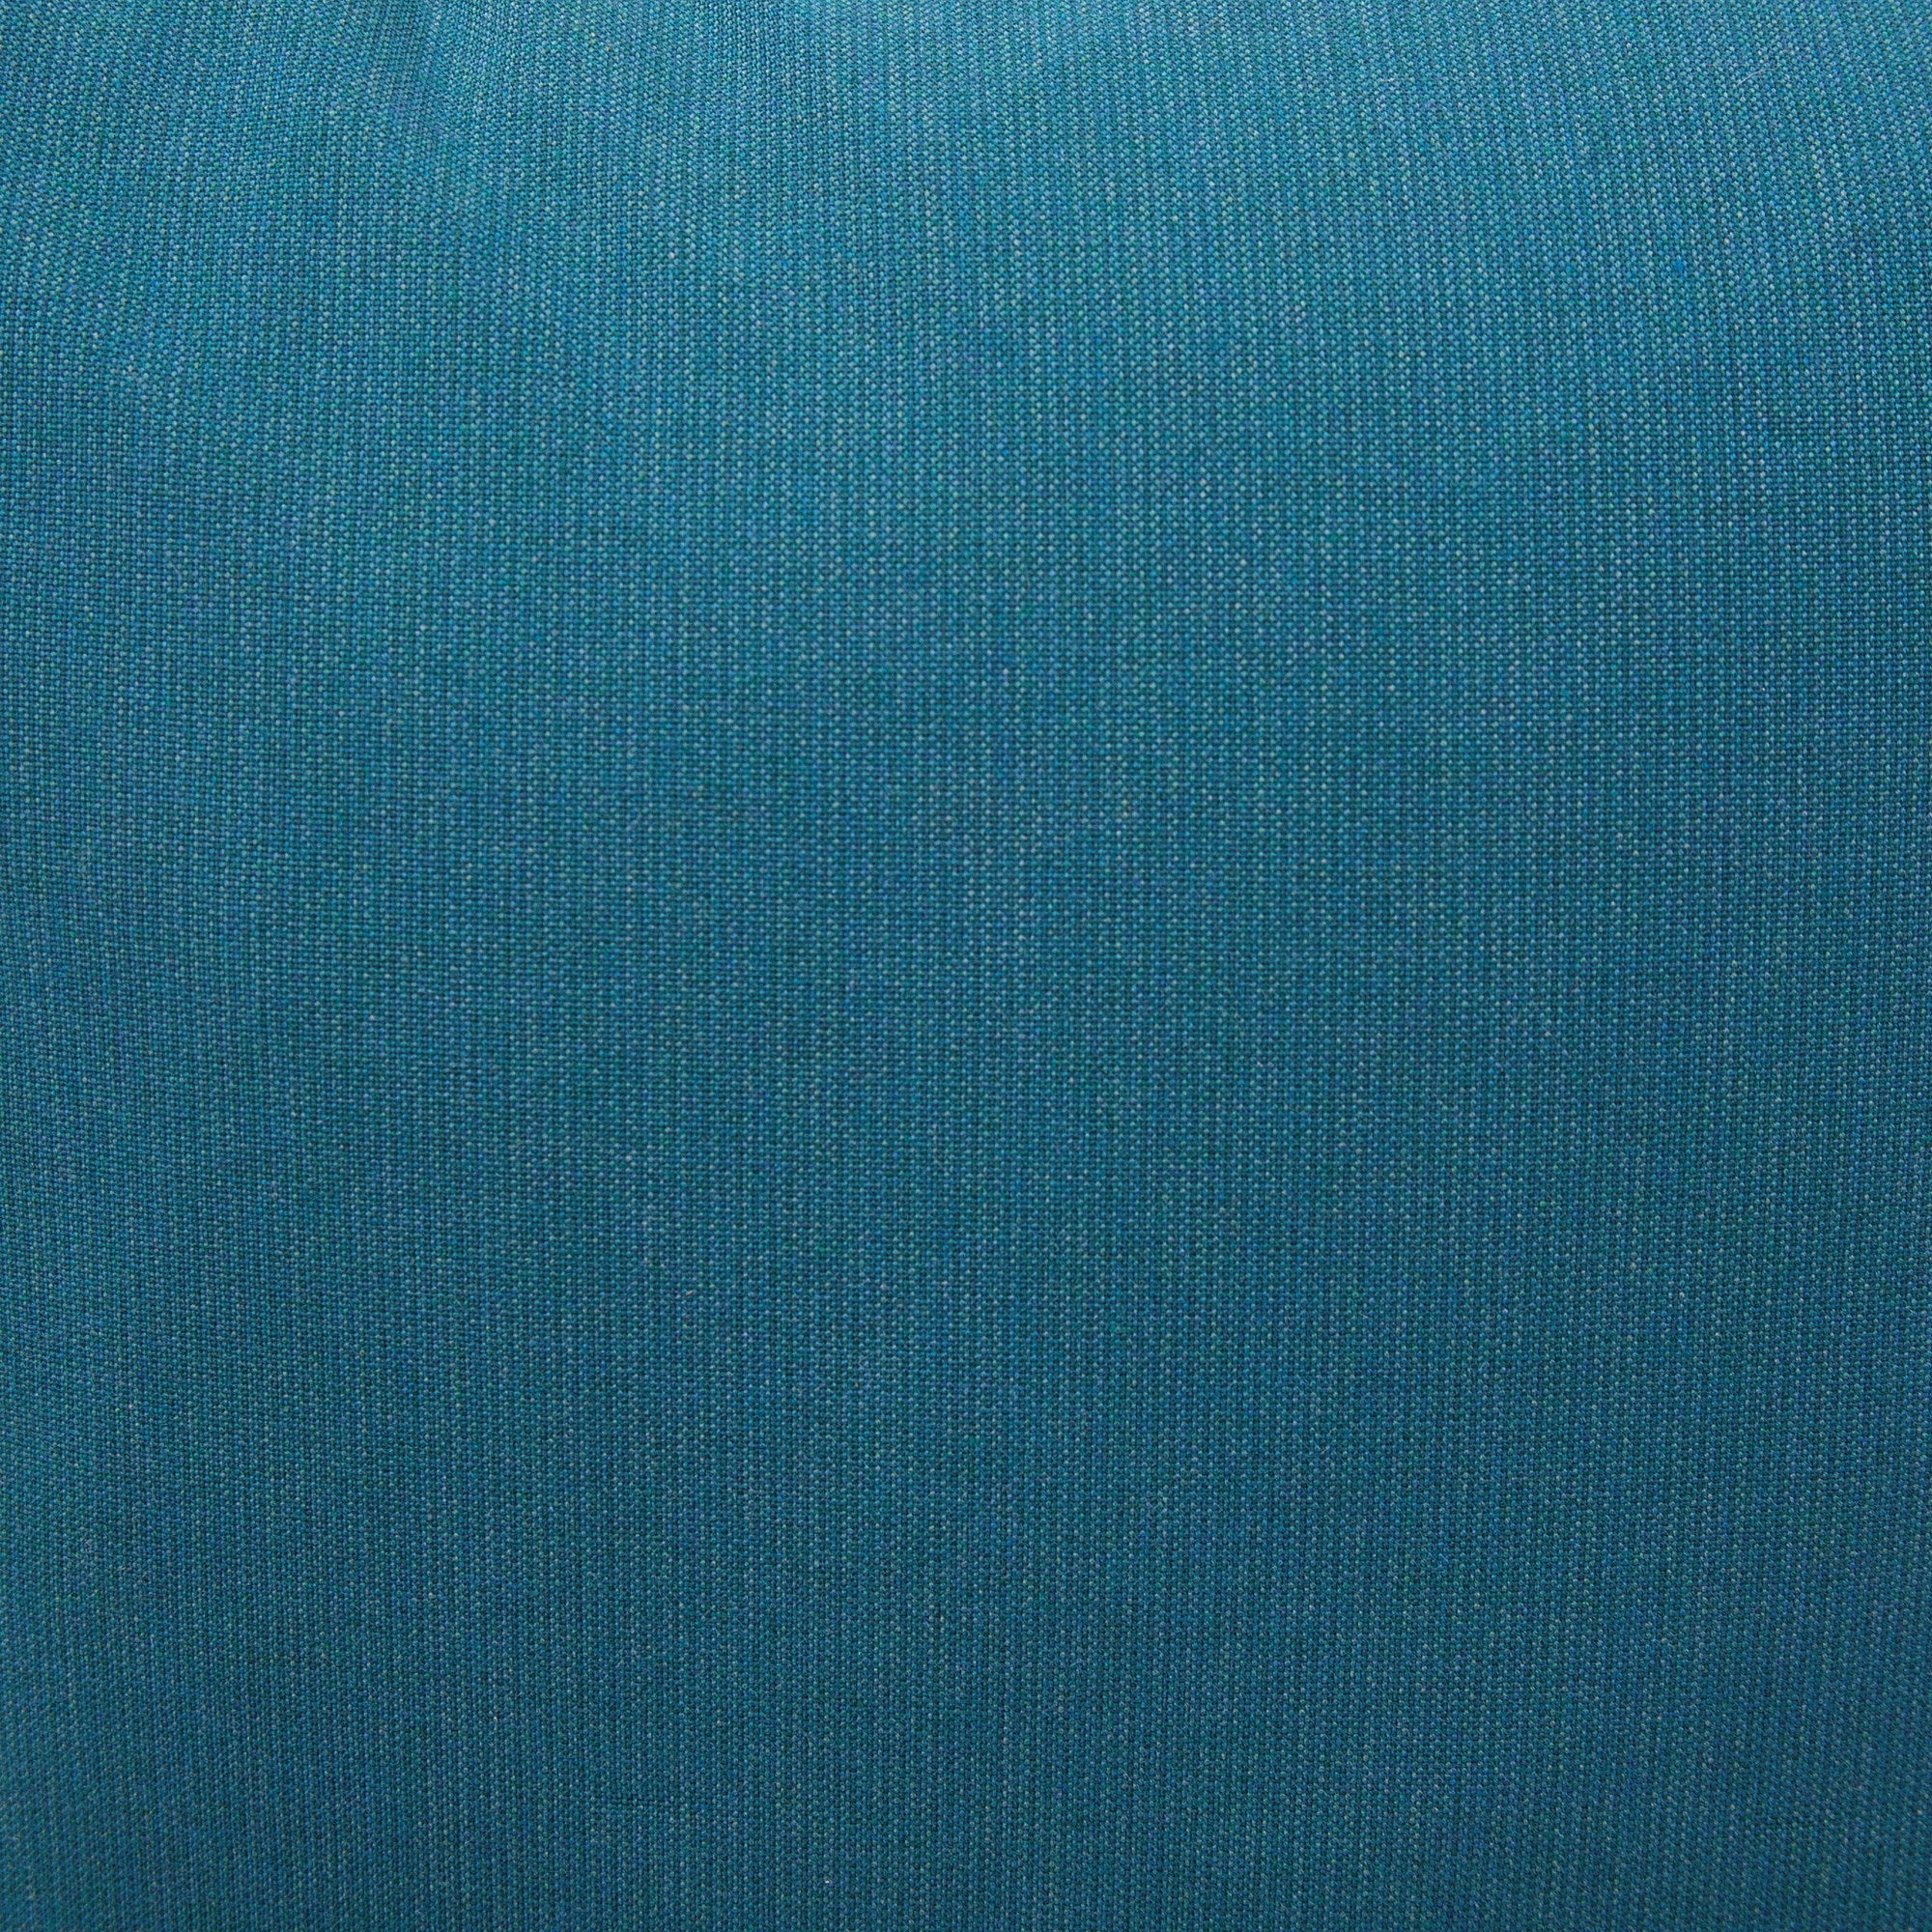 Seascape Turquoise Pillow- 20" x 20"